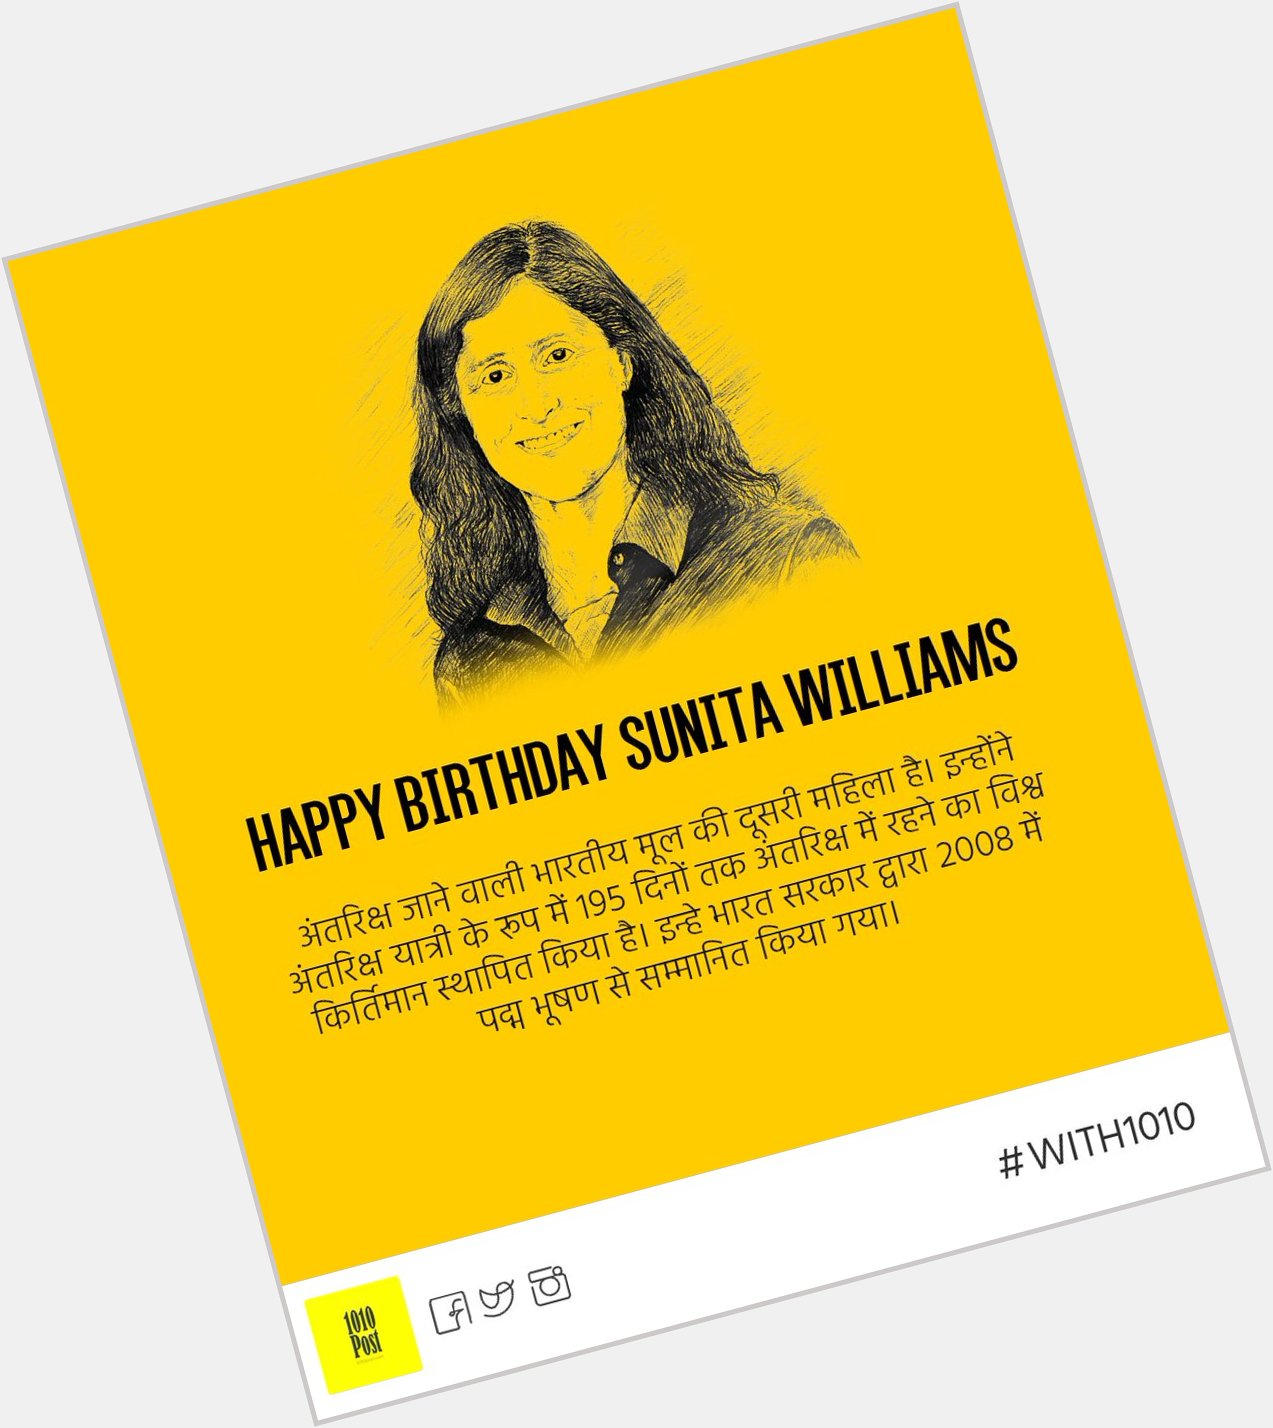 Happy birthday sunita williams     